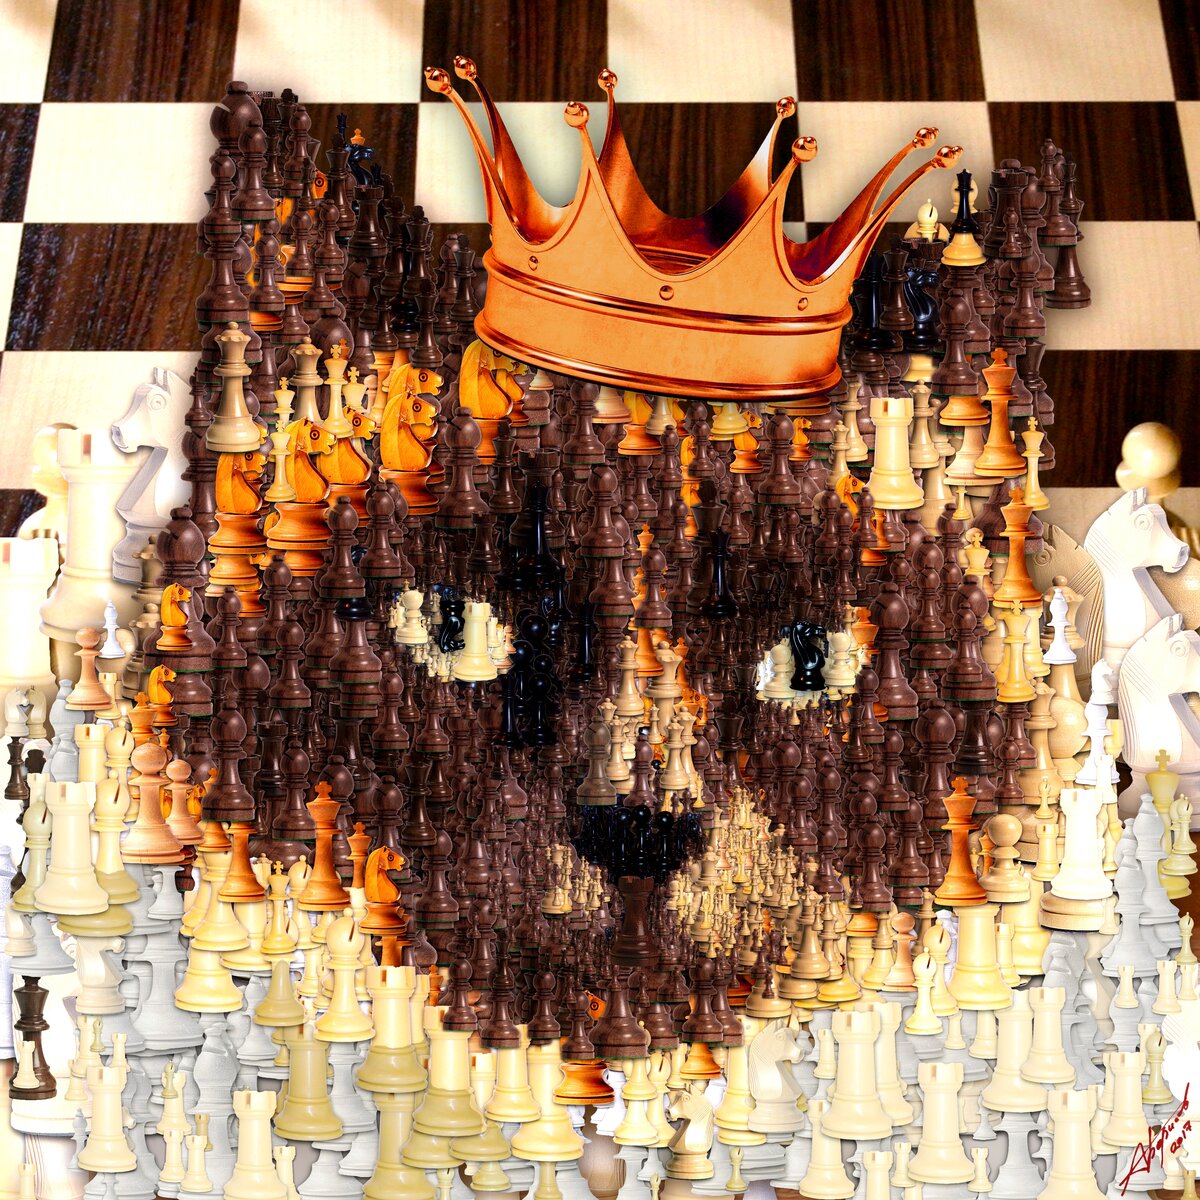 Шахматный кот символизирует четверолапого спутника четвёртого чемпиона мира по шахматам Александра Алёхина